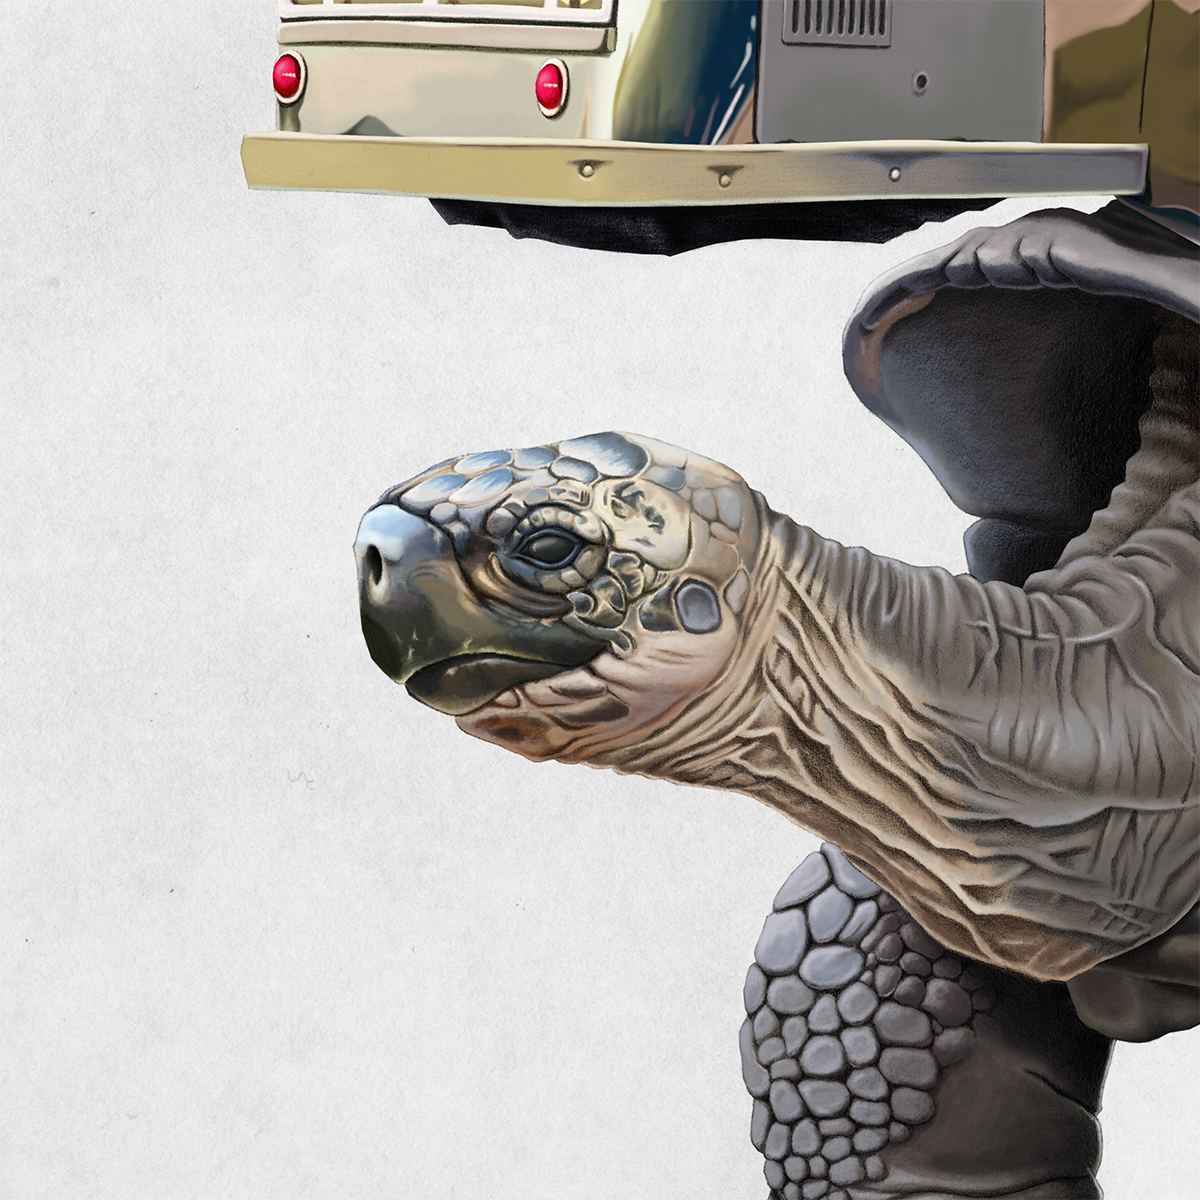 tortoise airstream pimp Vehicle mammal illustrations draawings pencil digital Nature rob snow